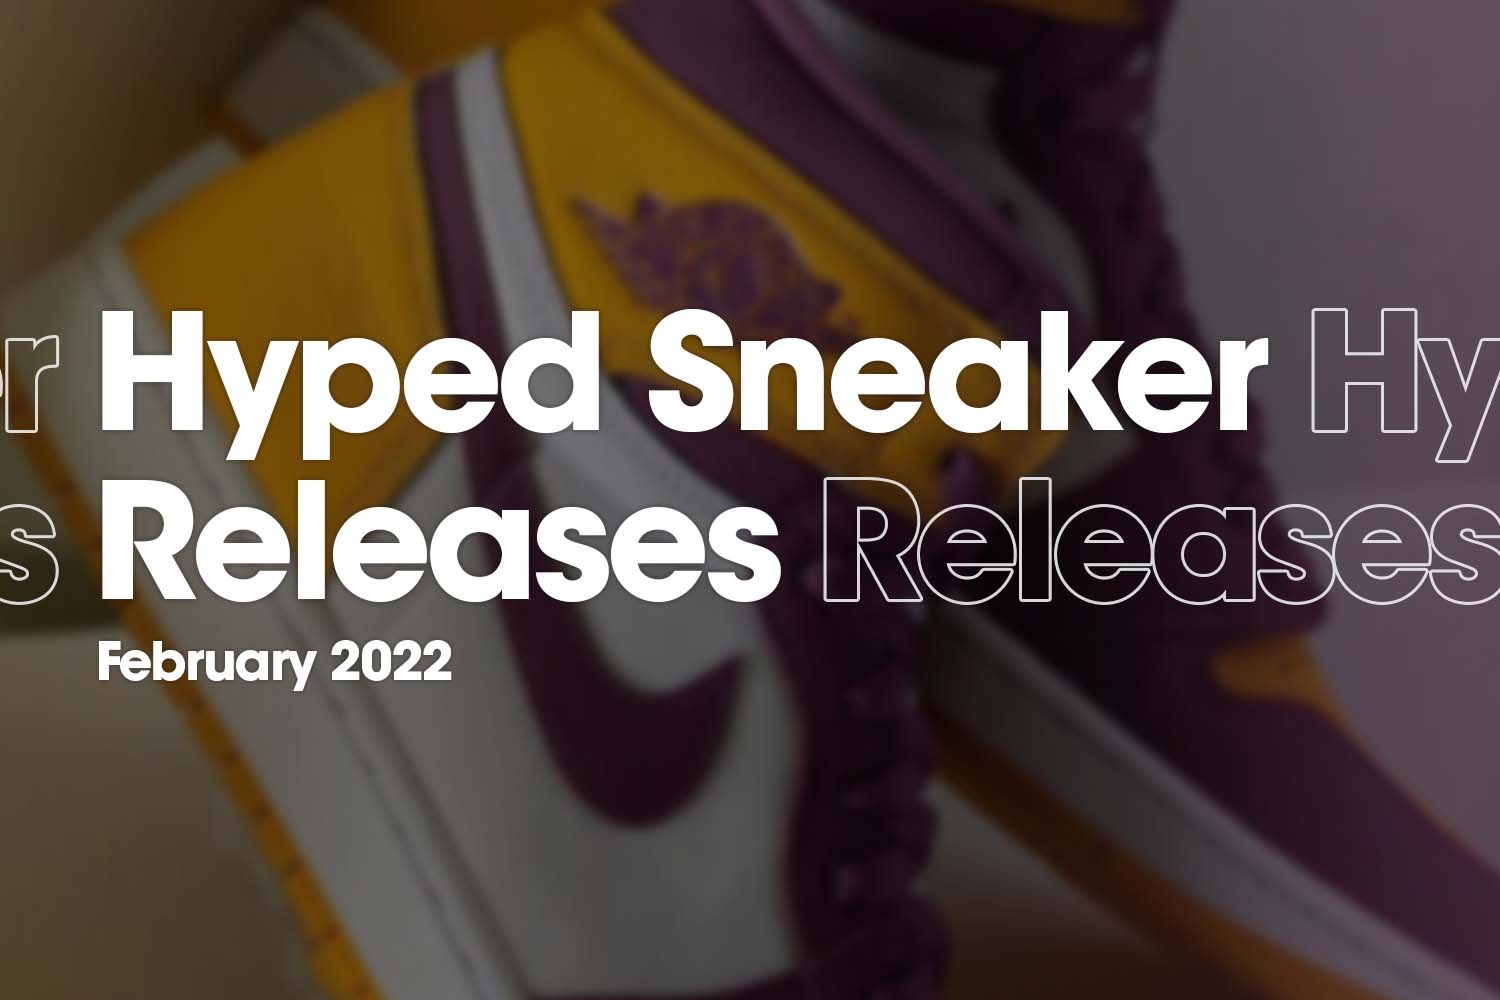 Hyped Sneaker Releases van februari 2022